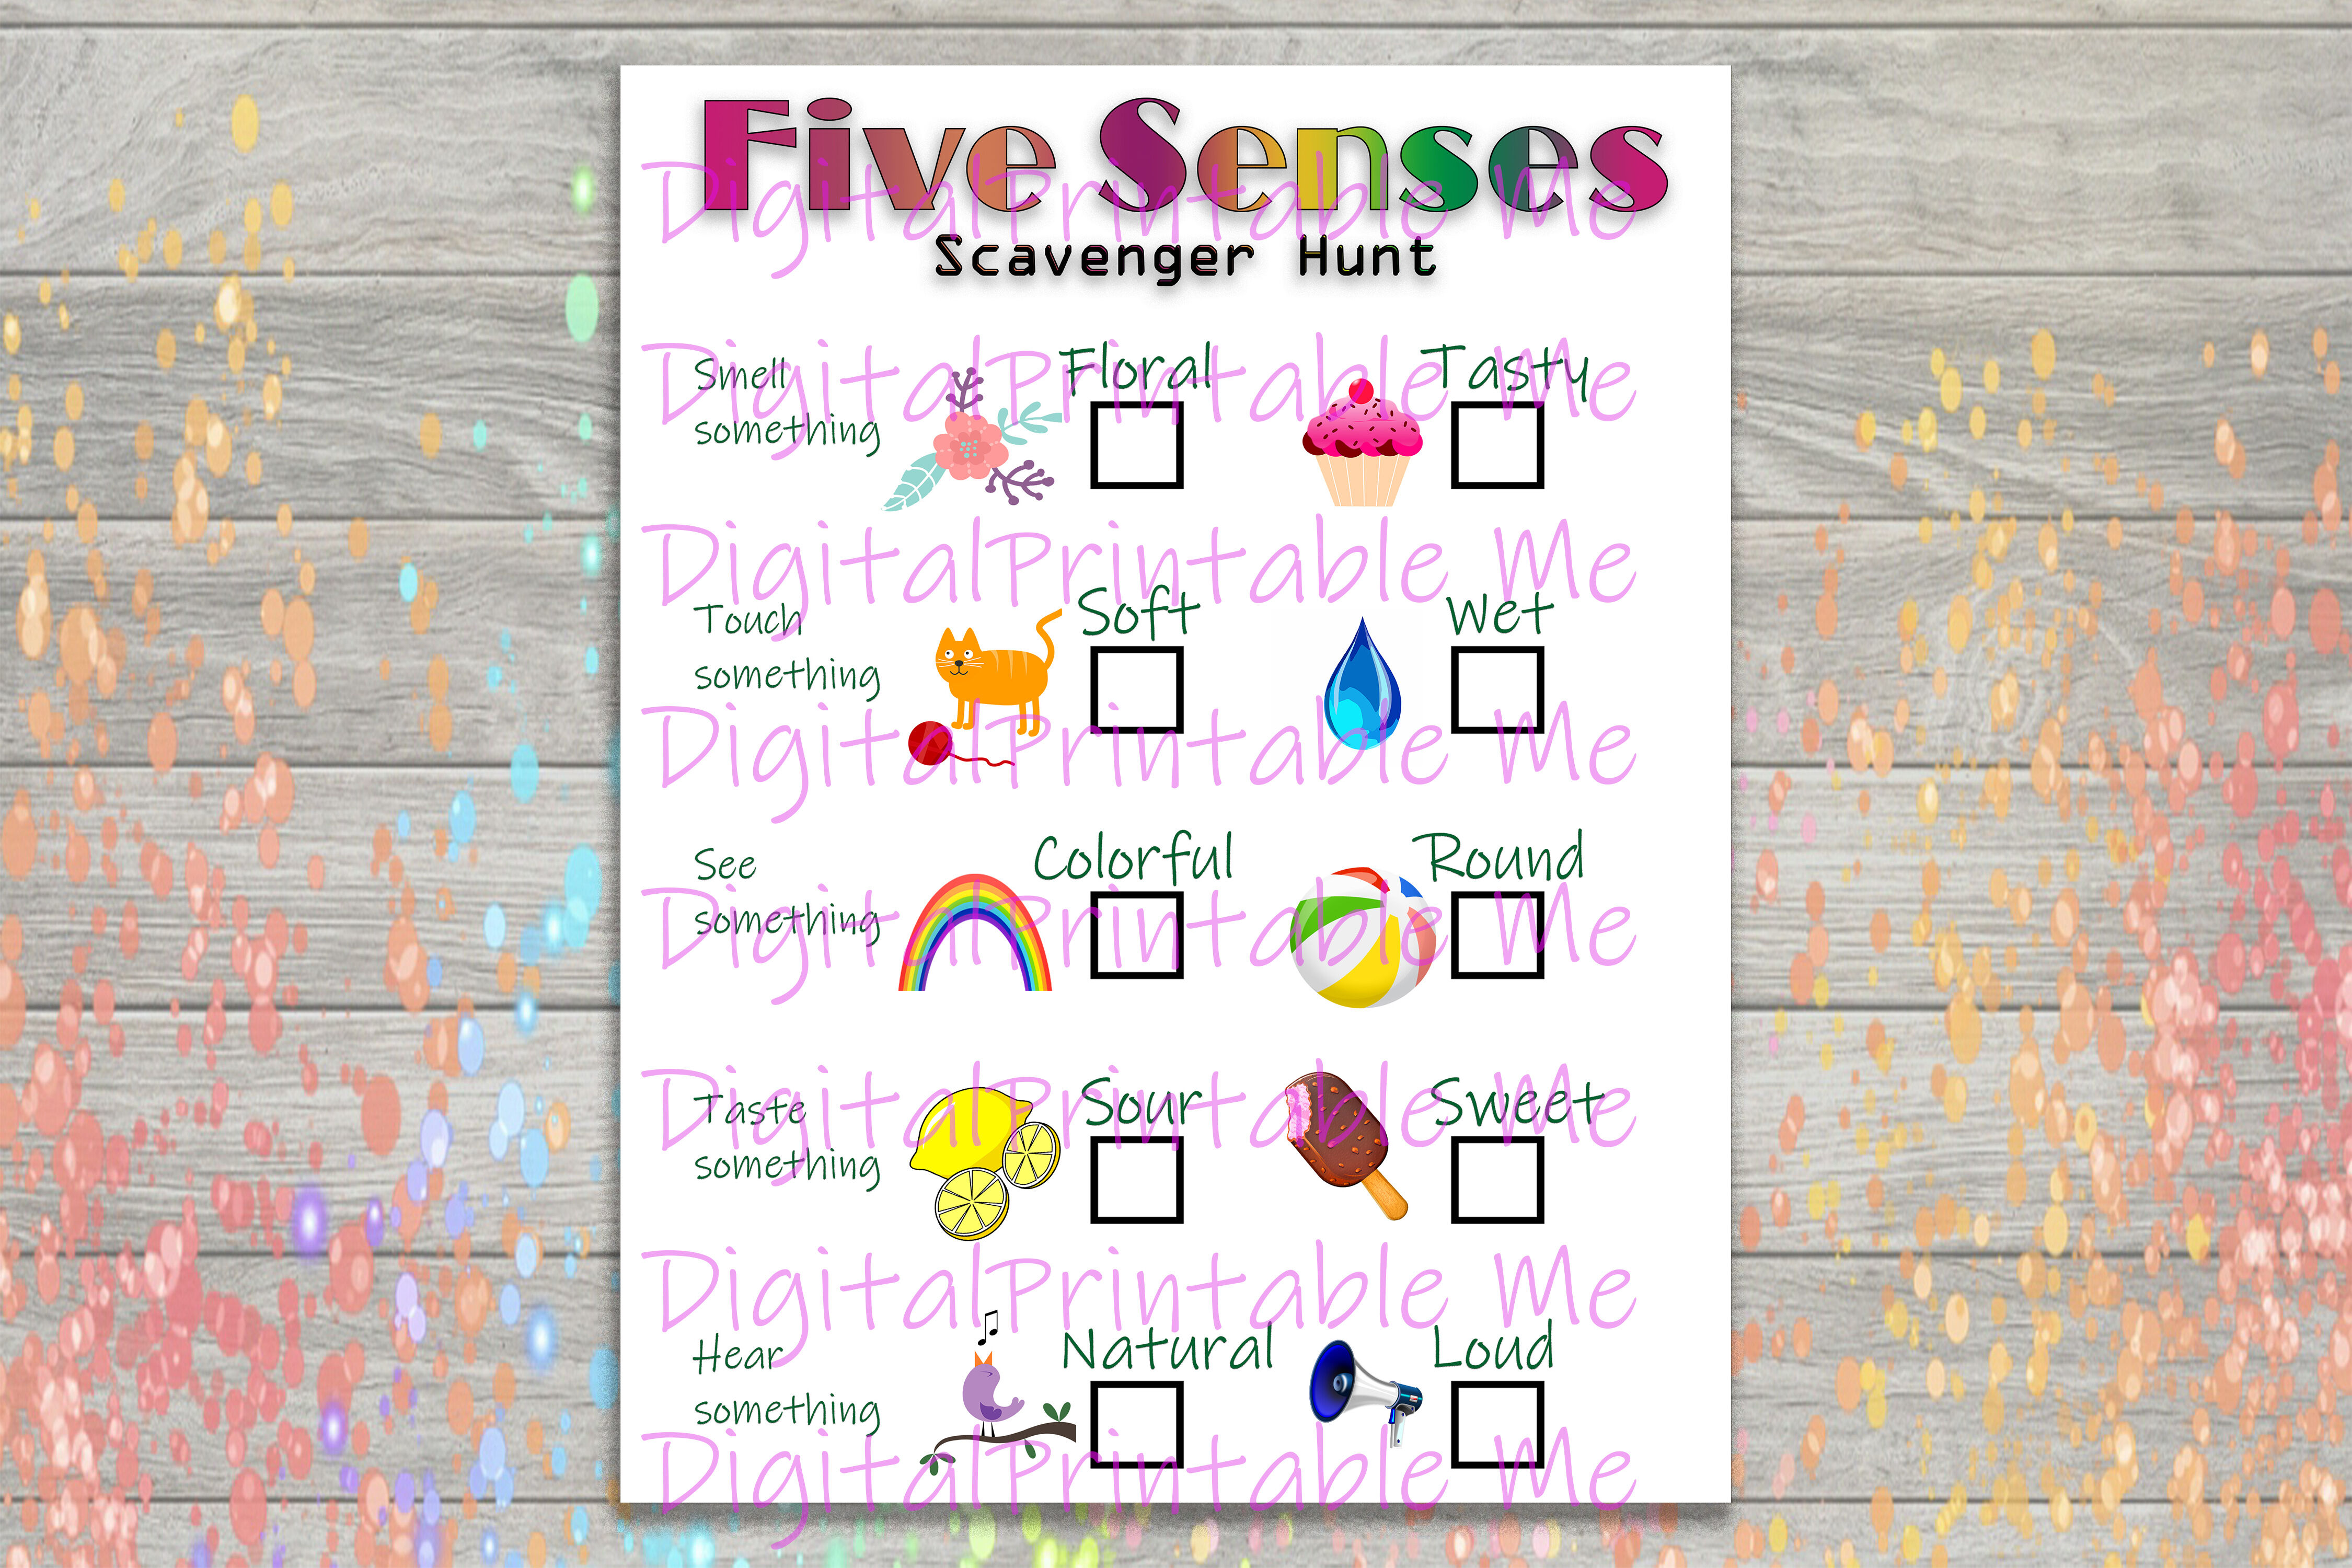 Five Sense Scavenger Hunt Printable Kids Activity Game Download Pa By Digitalprintableme Thehungryjpeg Com